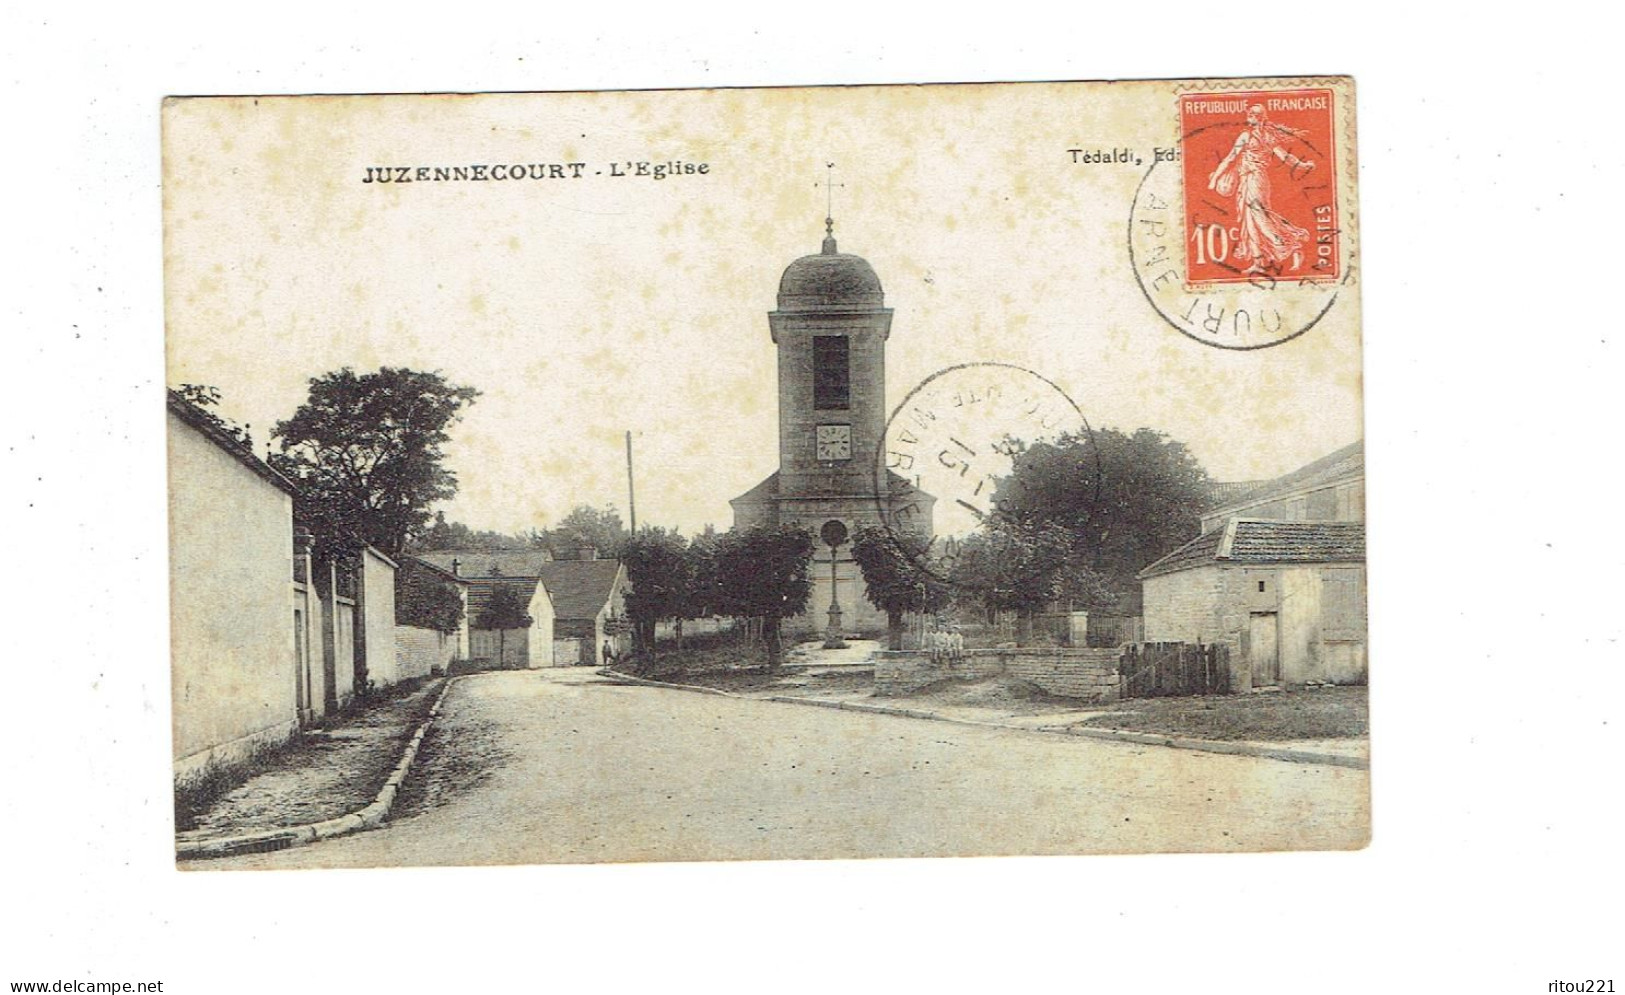 Cpa - 52 - JUZENNECOURT - L'EGLISE - 1915 - Tédaldi - - Juzennecourt